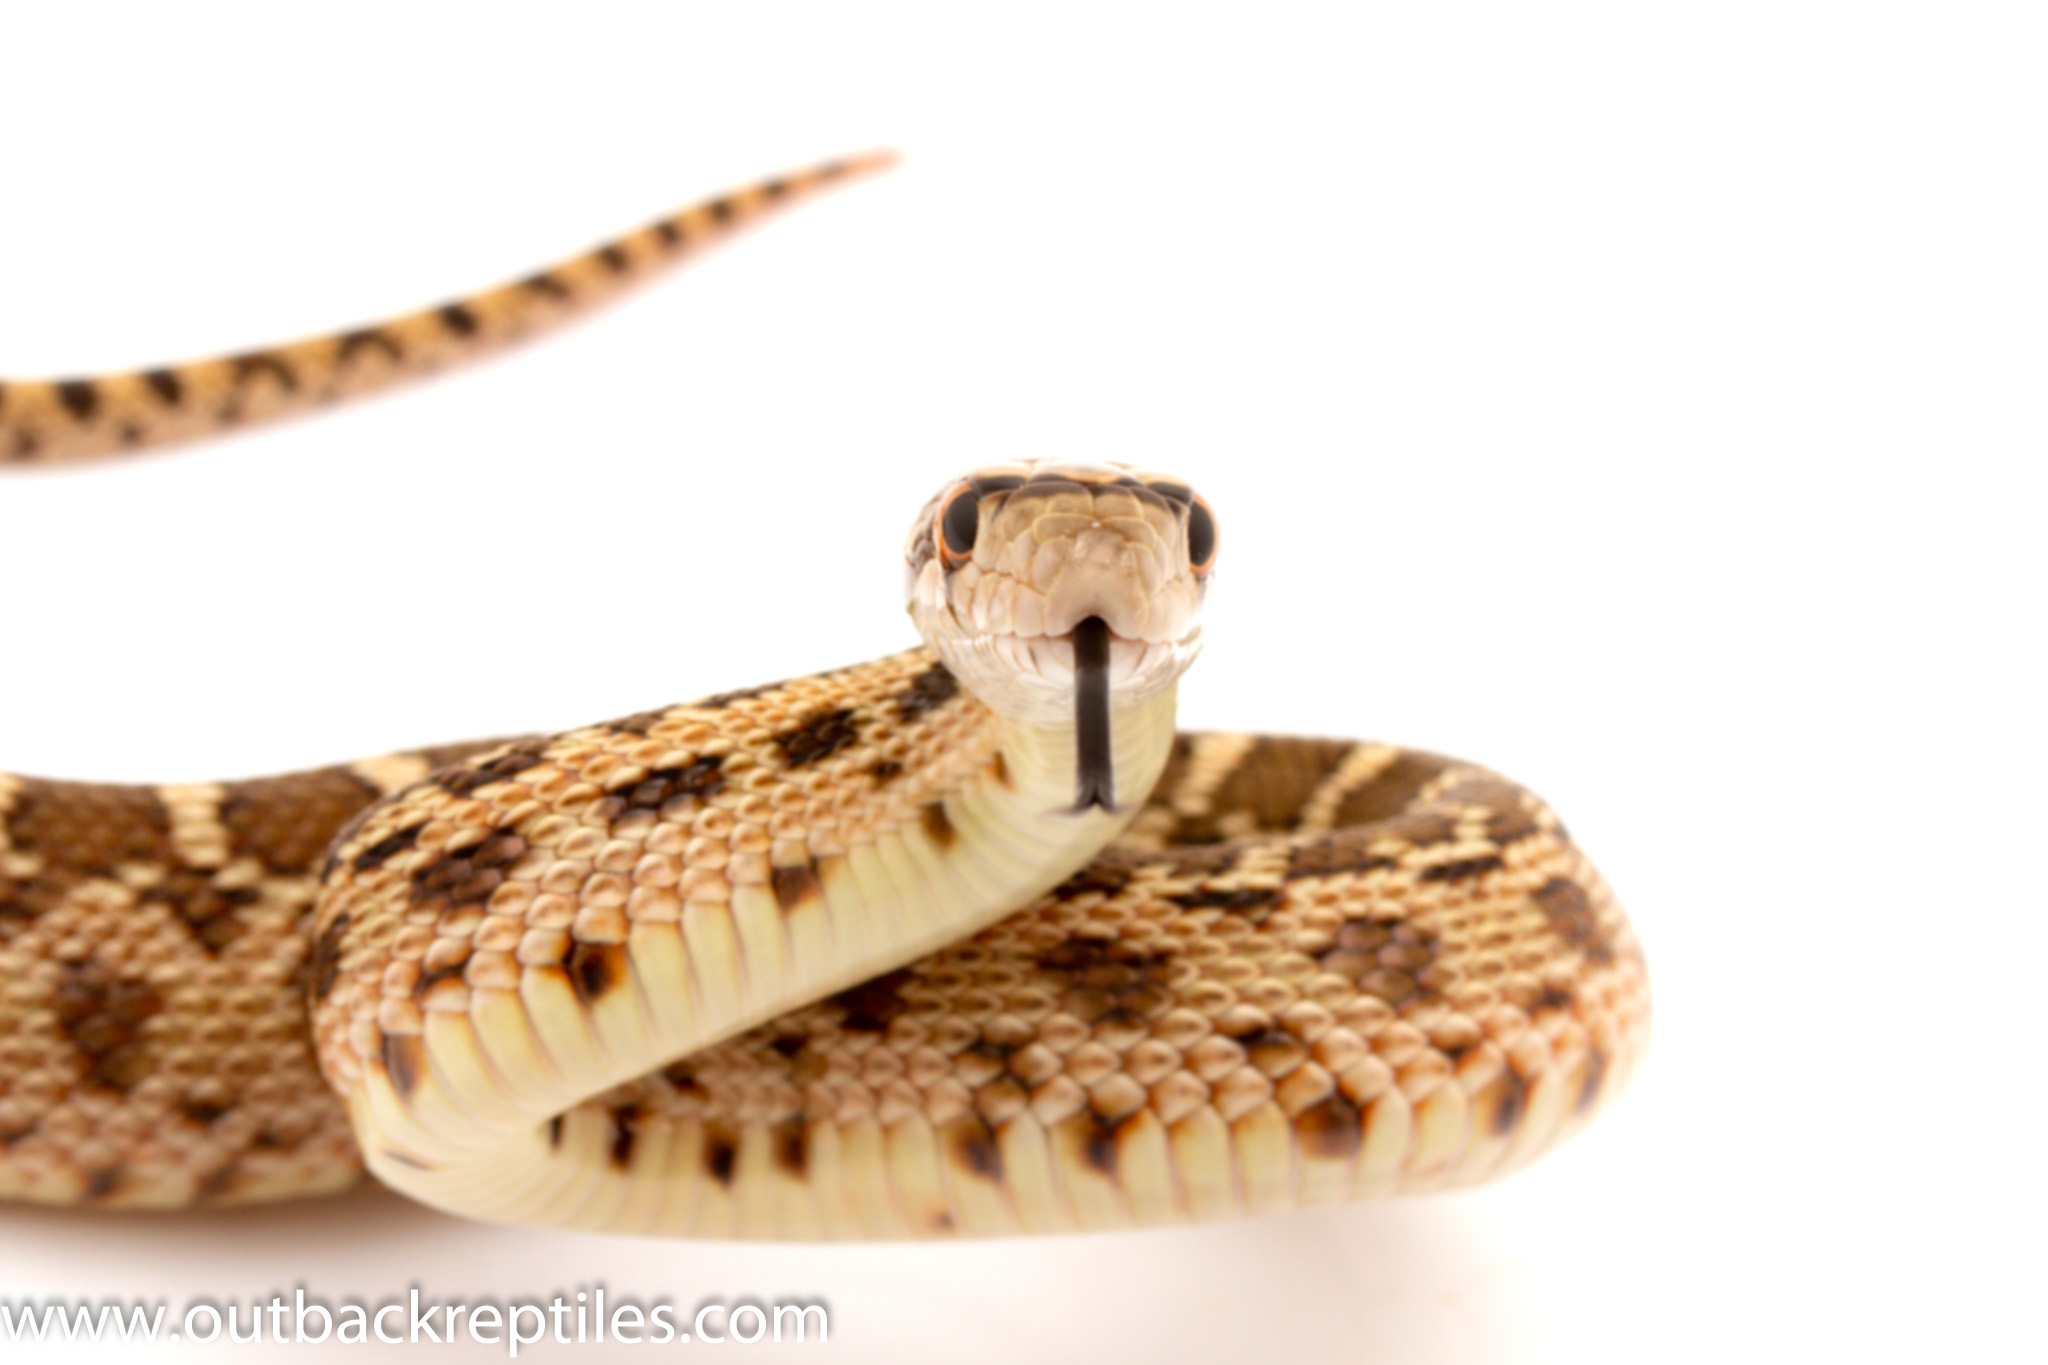 Gopher Snake for sale